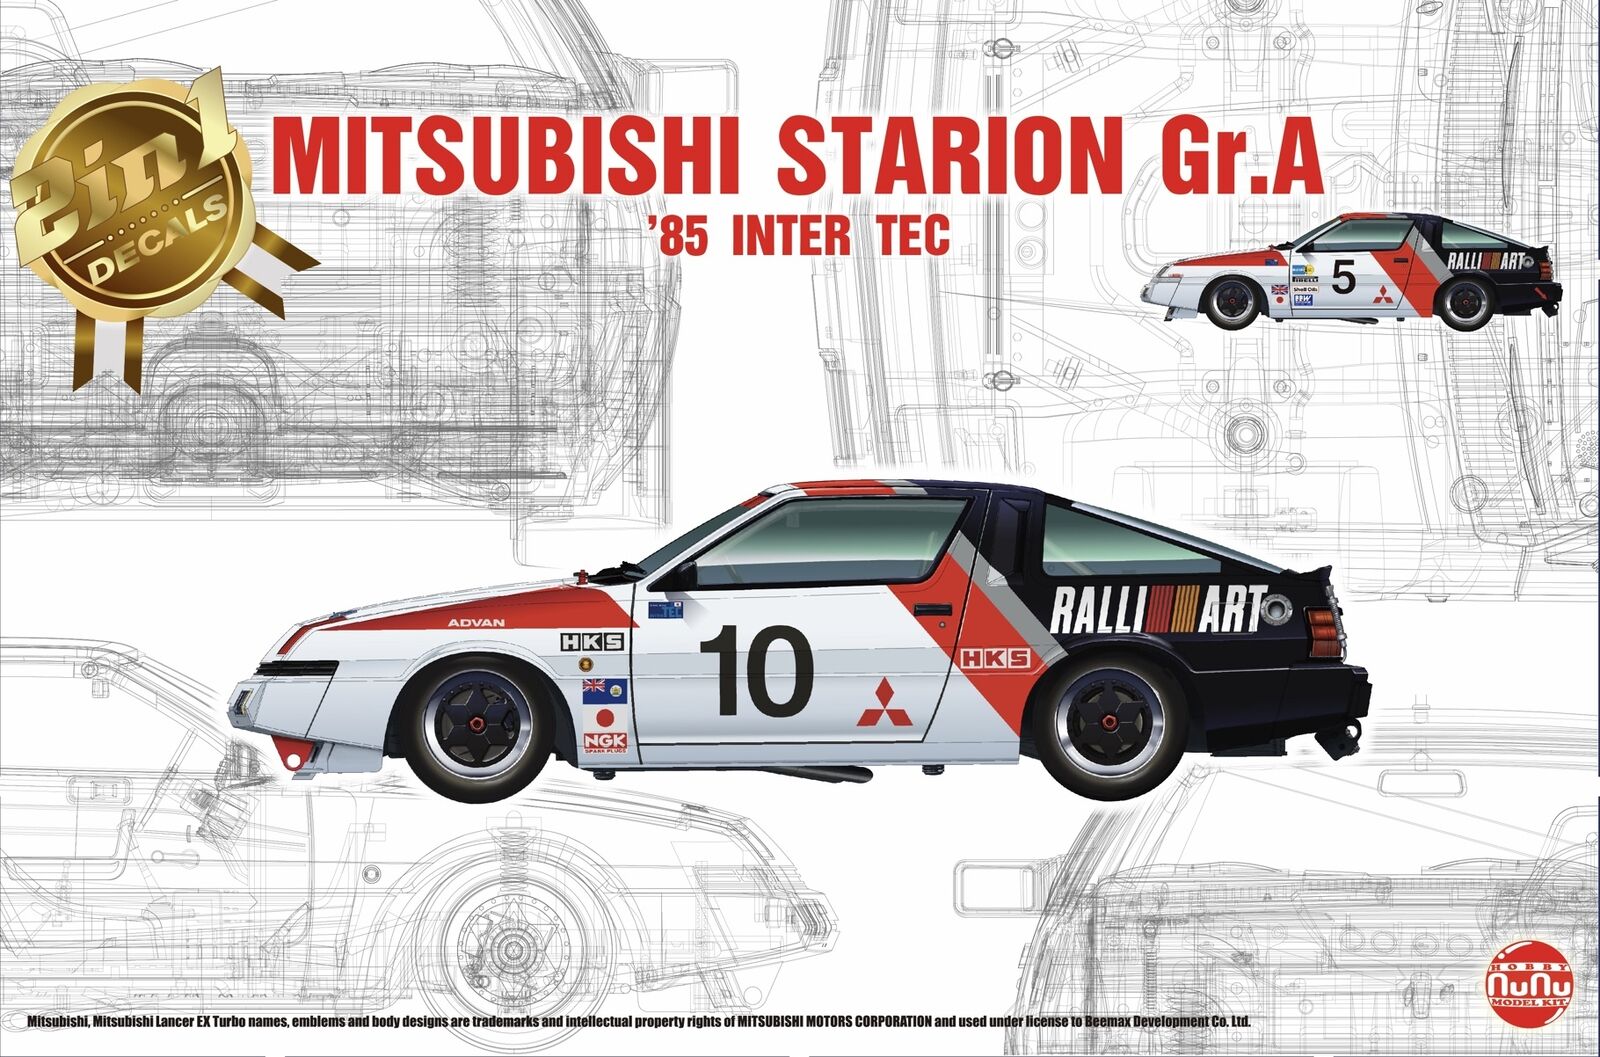 Mitsubishi Starion Gr.A 1985 Inter Tec